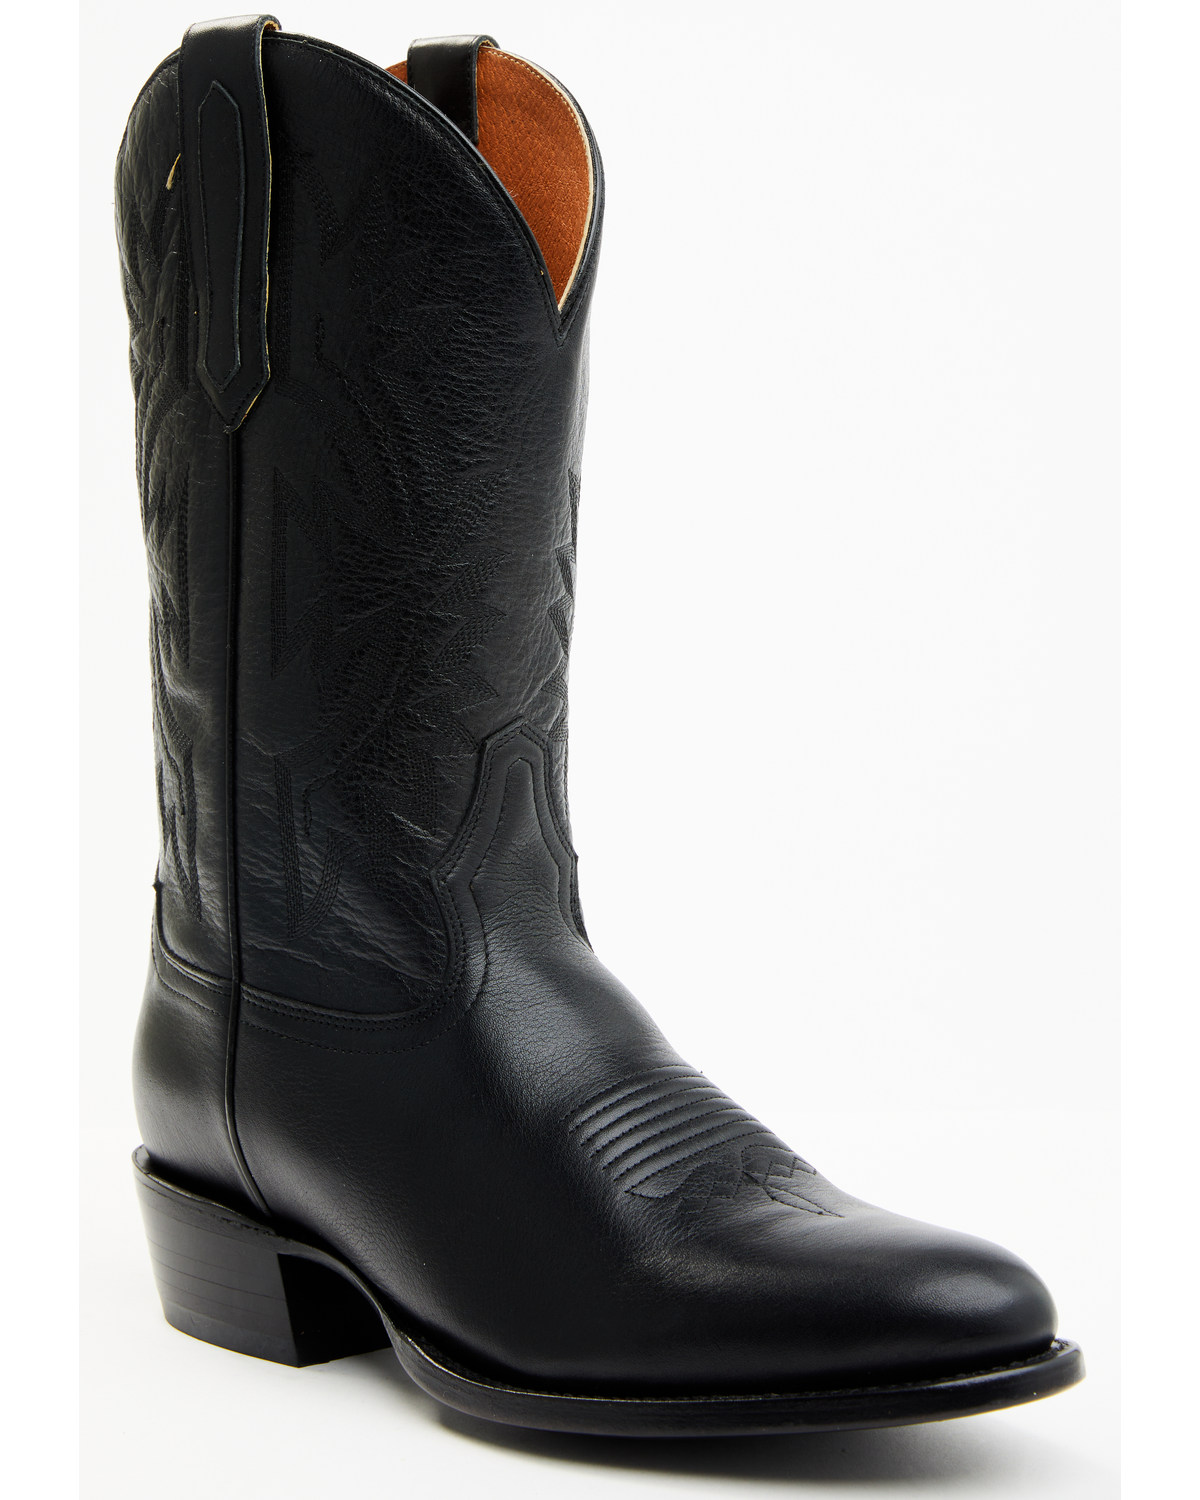 Cody James Men's Western Boots - Round Toe